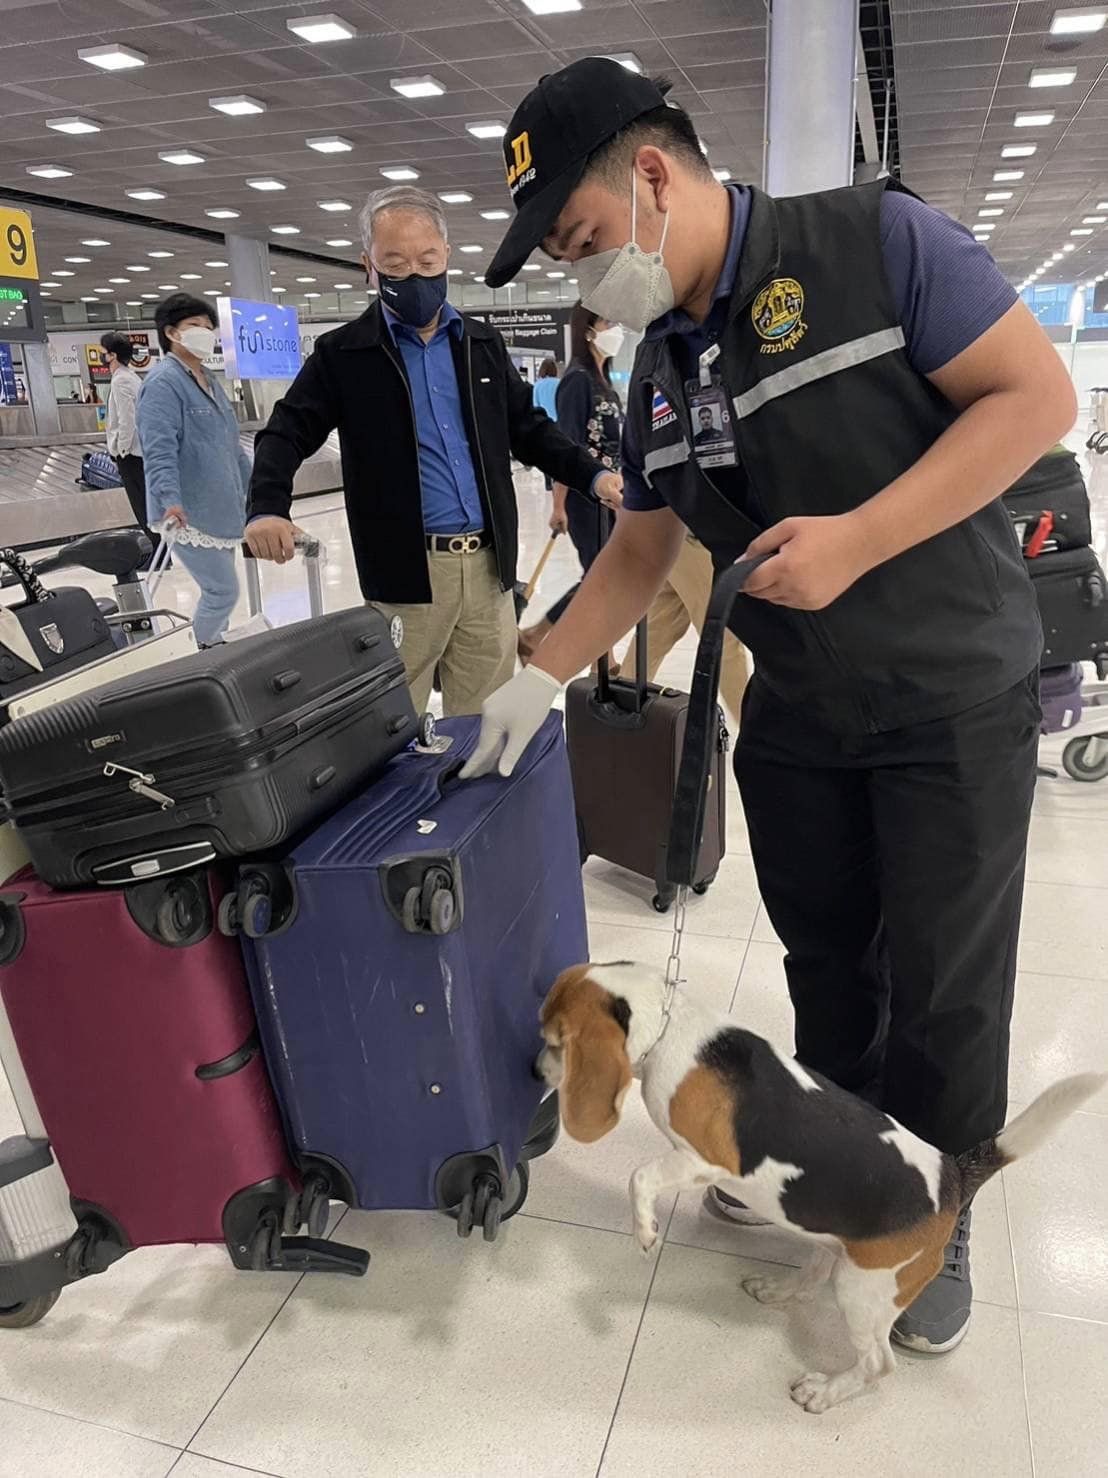 baggage sniffer dog